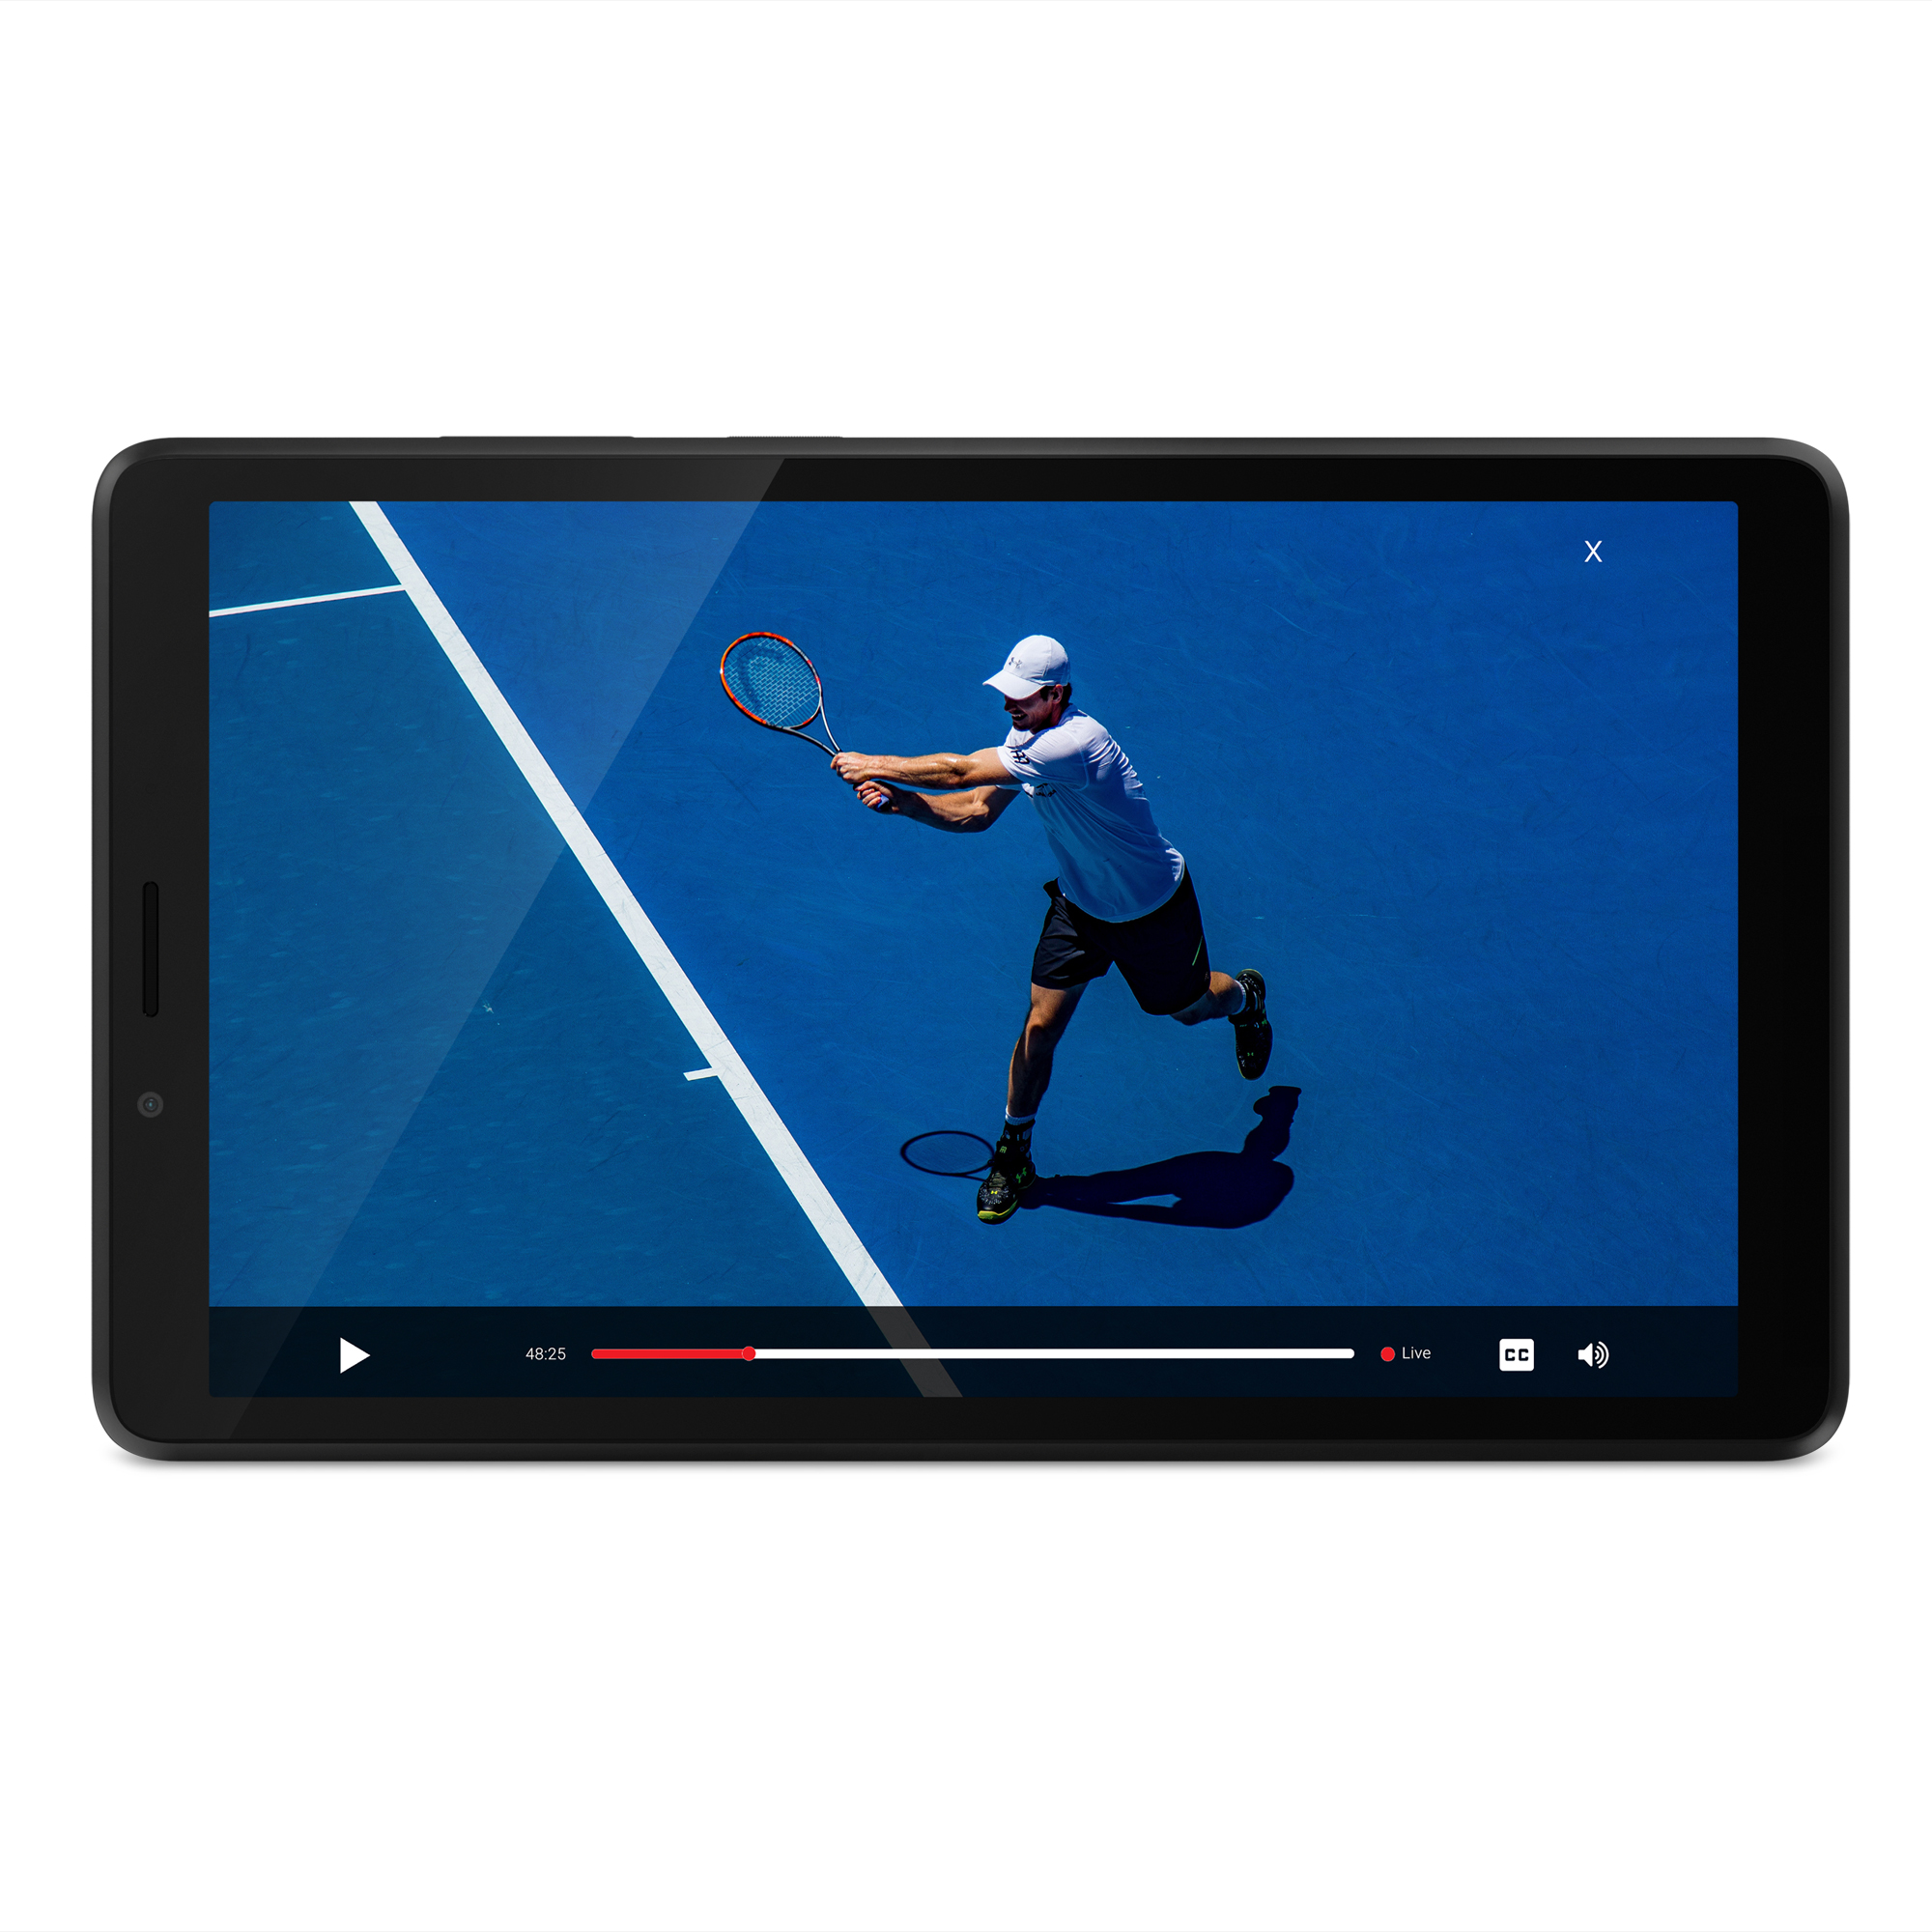 Lenovo Tab M7 7" Tablet, 16GB Storage, 1GB Memory, 1.3GHz Quad-Core Processor, Android 9 Pie Go Edition, HD Display - image 1 of 8